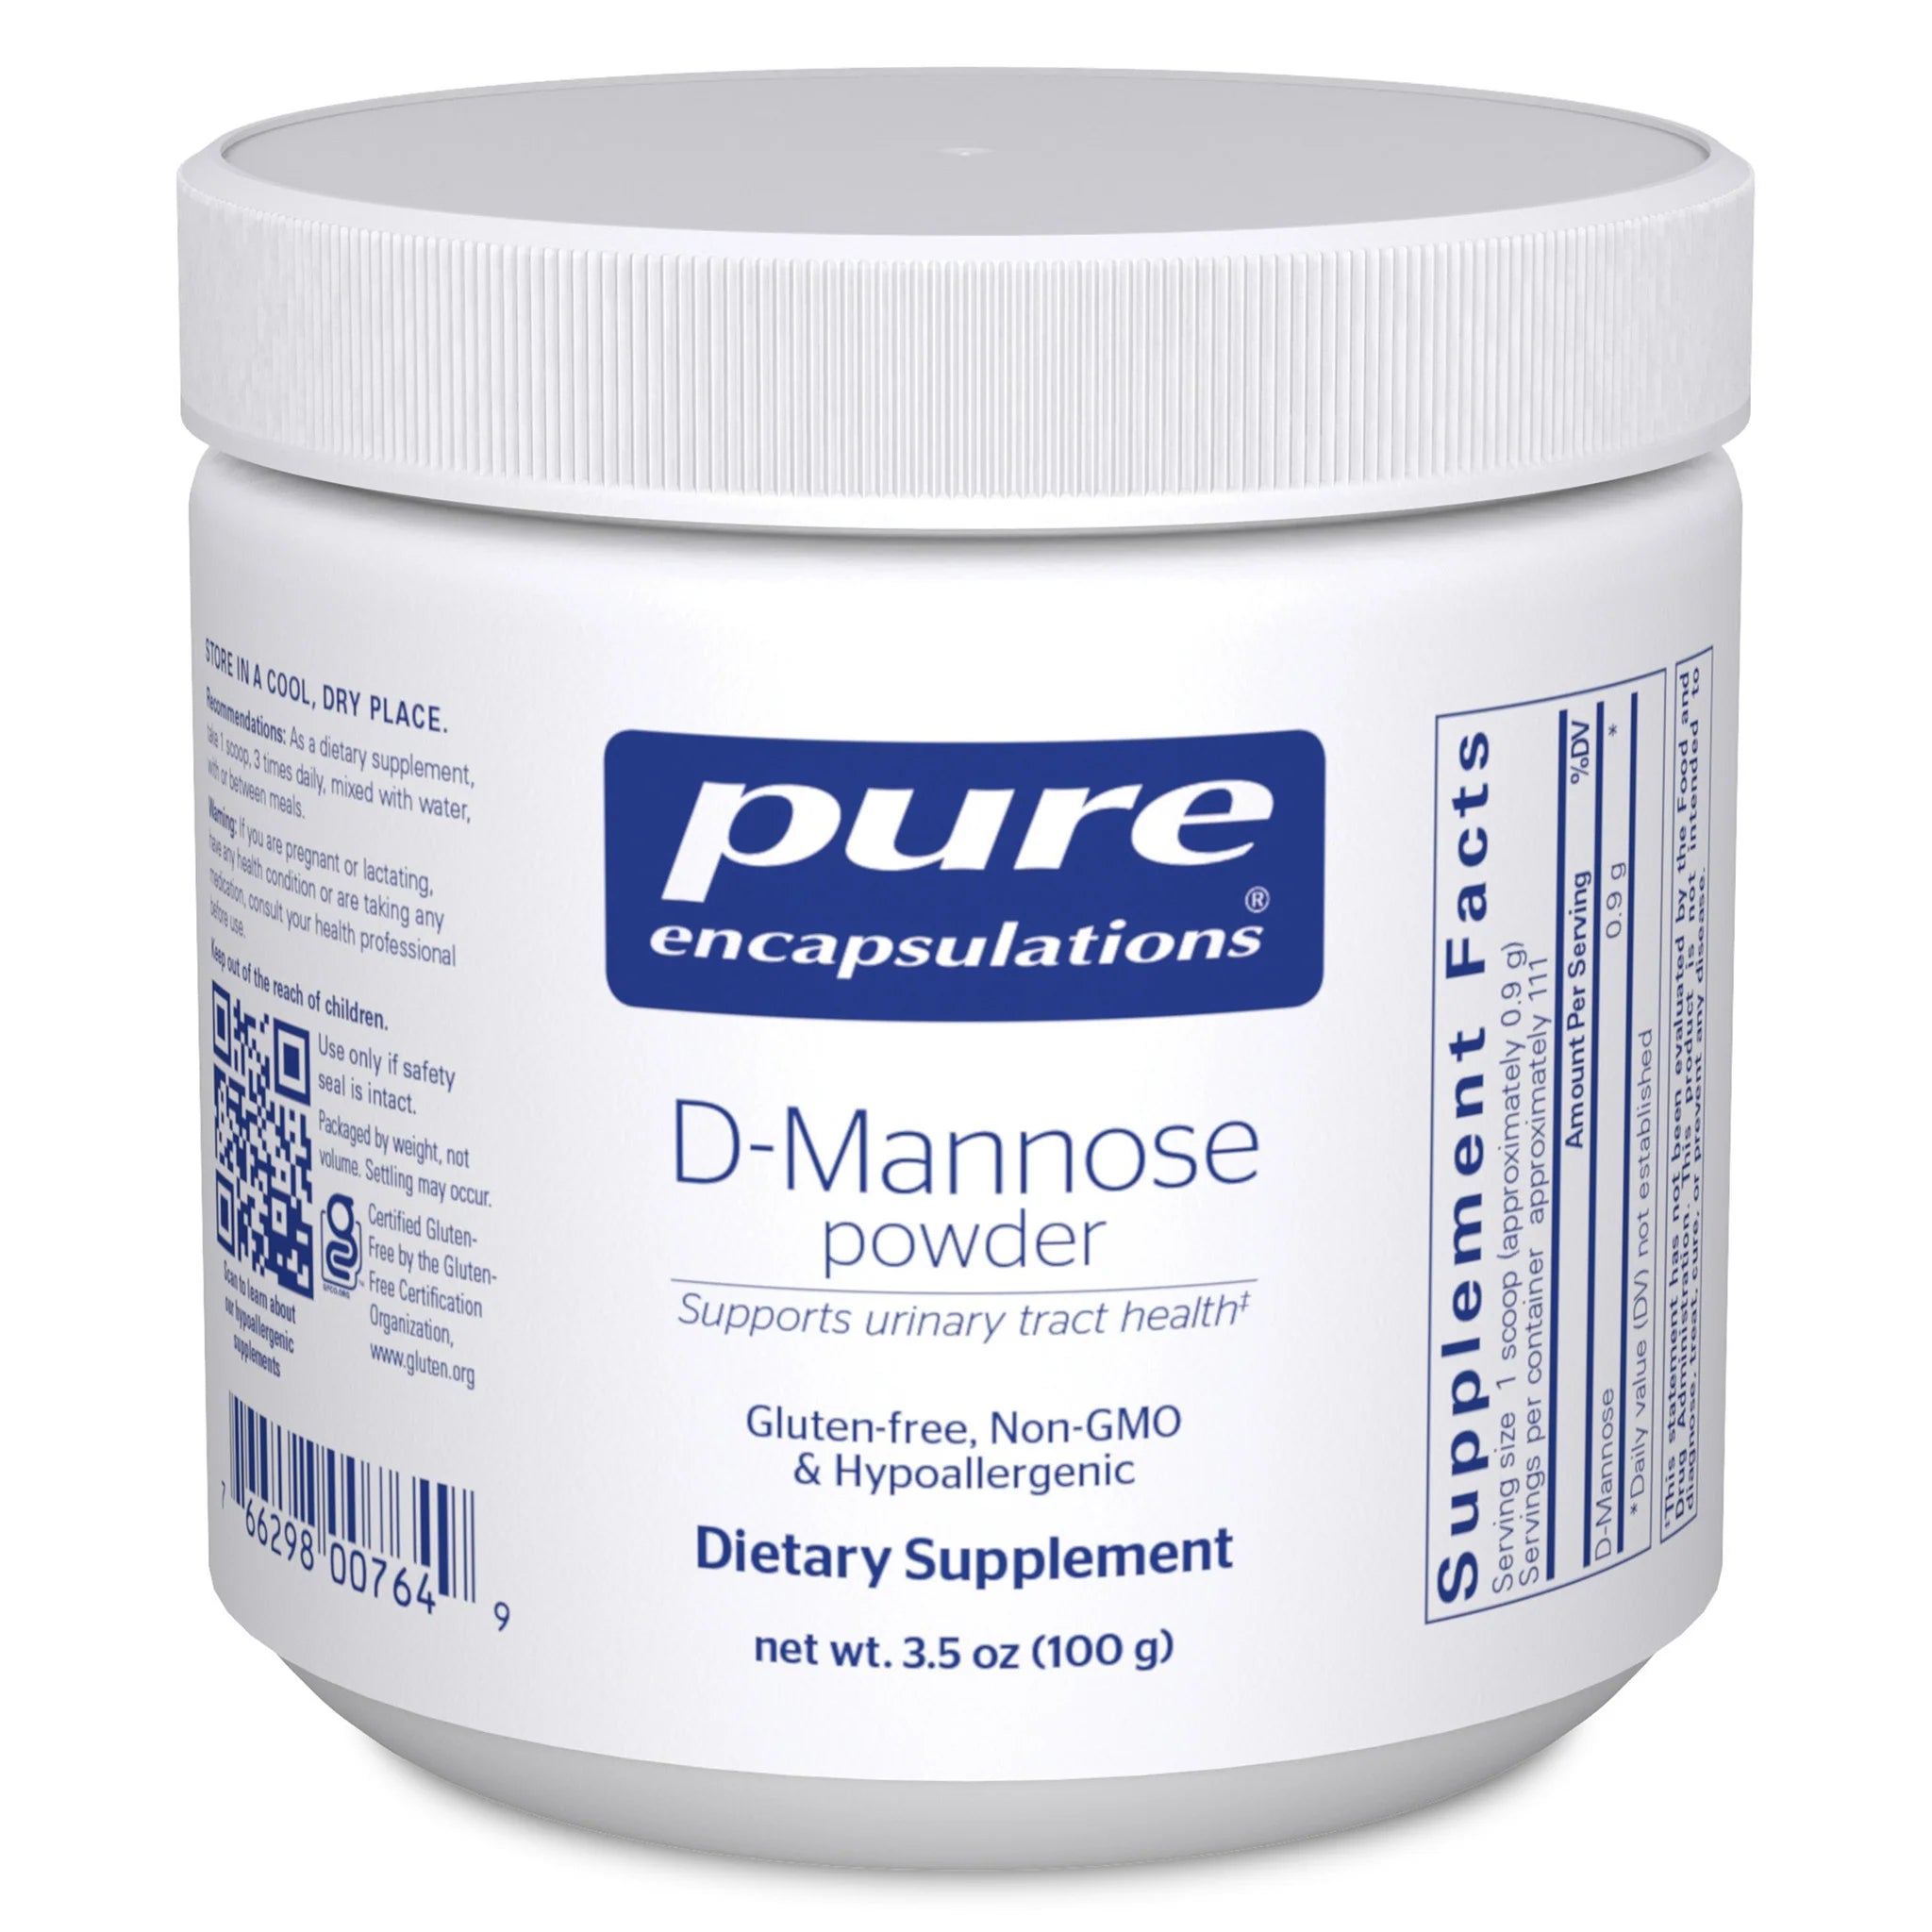 D-Mannose powder